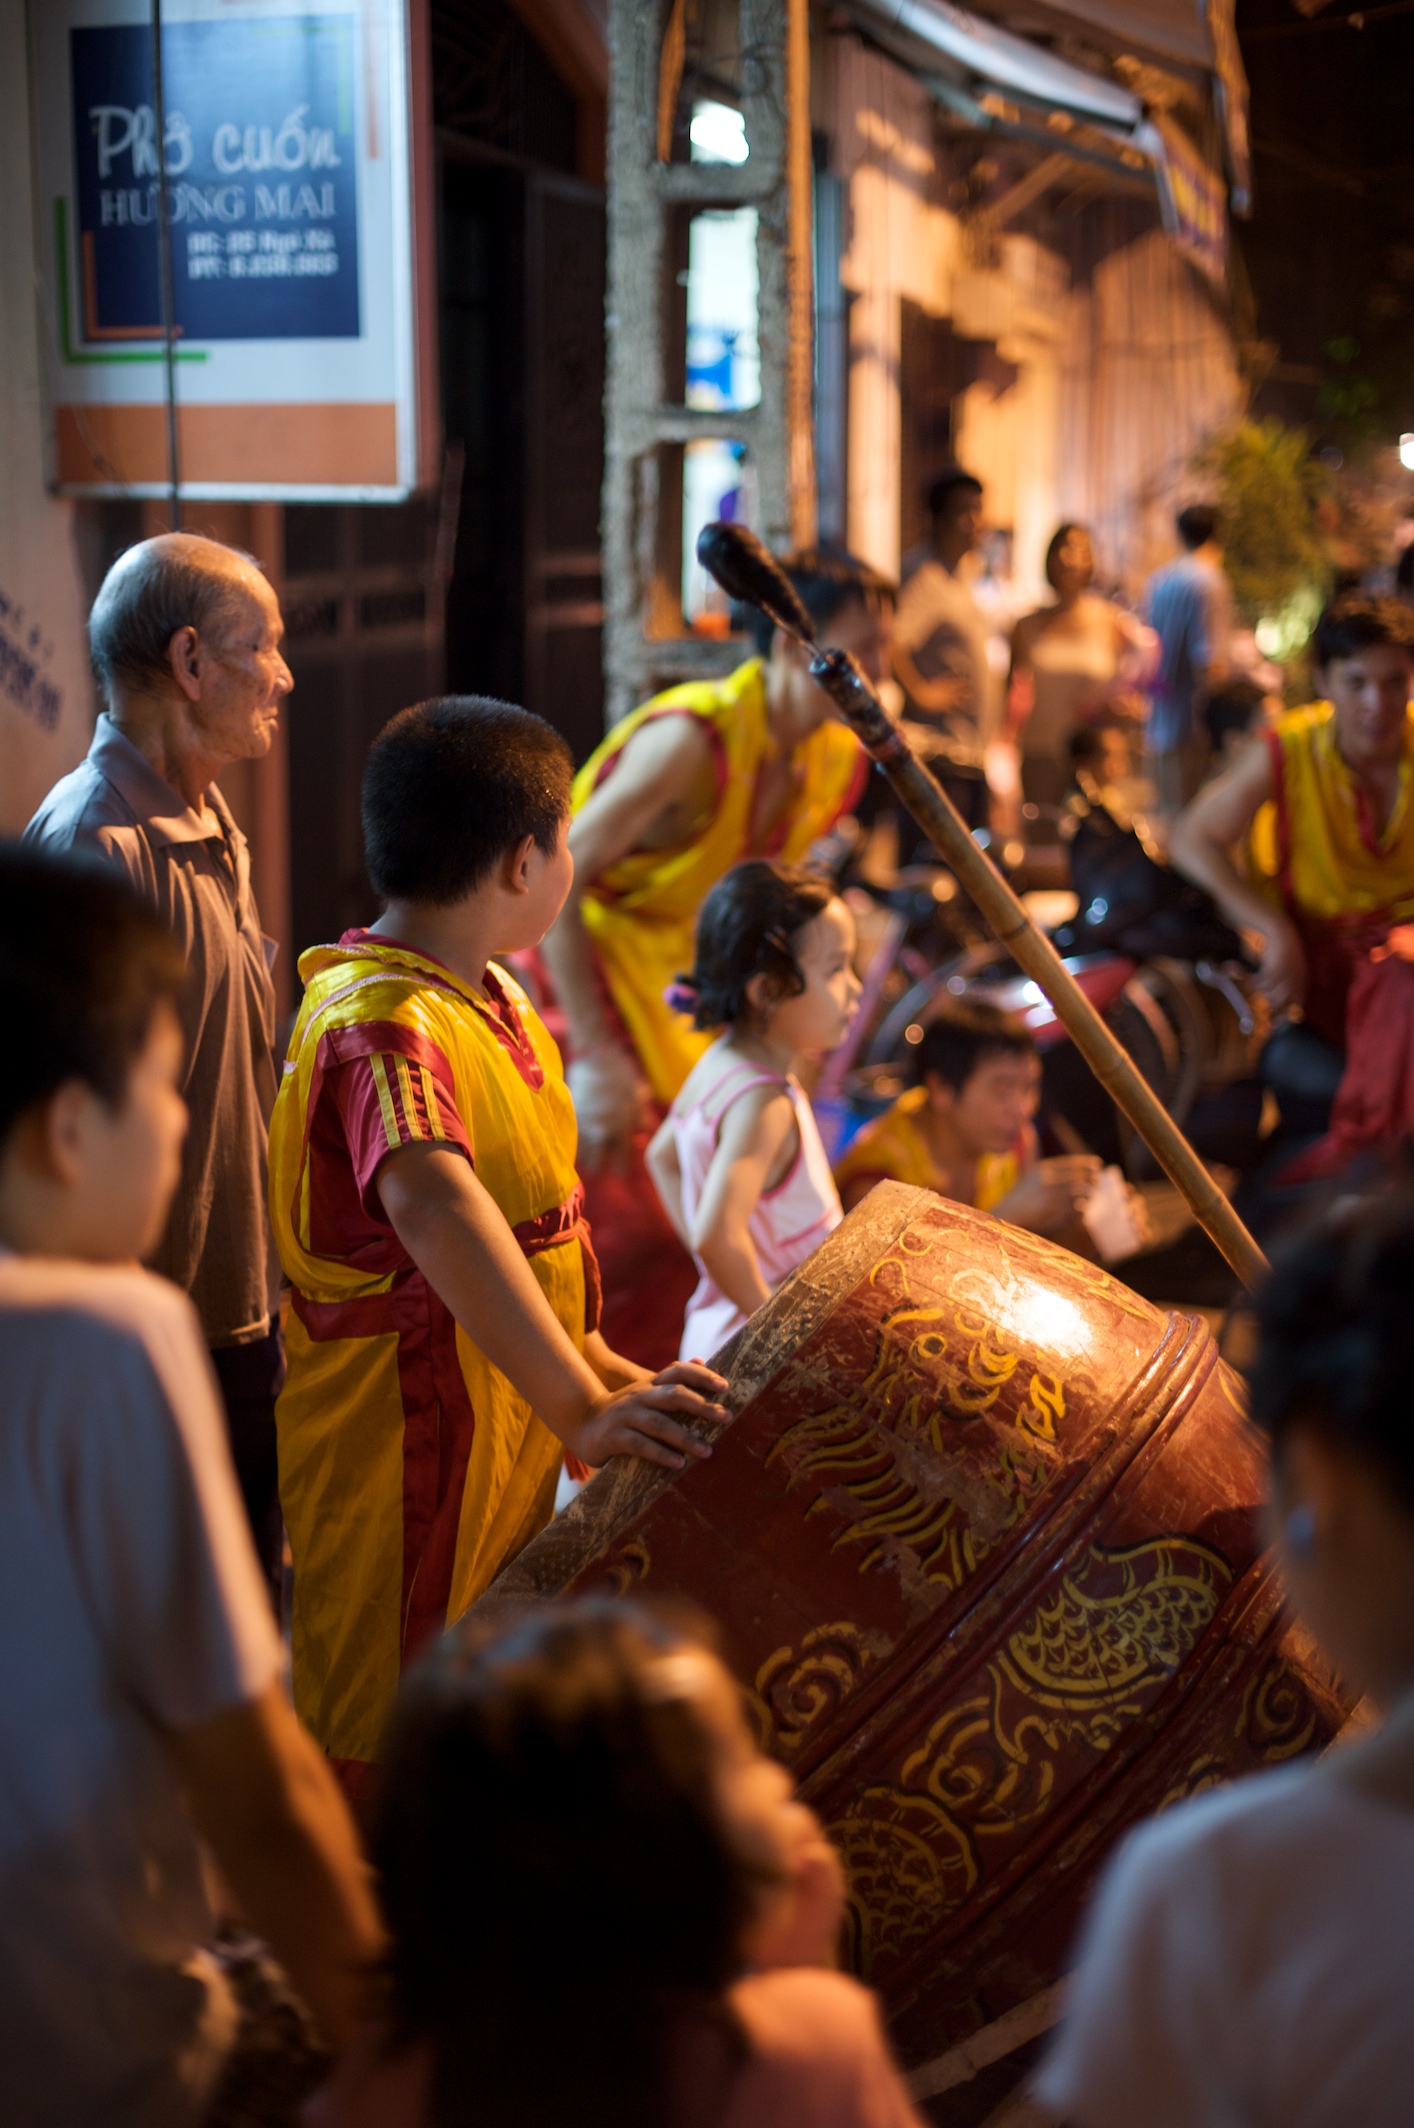 Tết Trung Thu - the drum